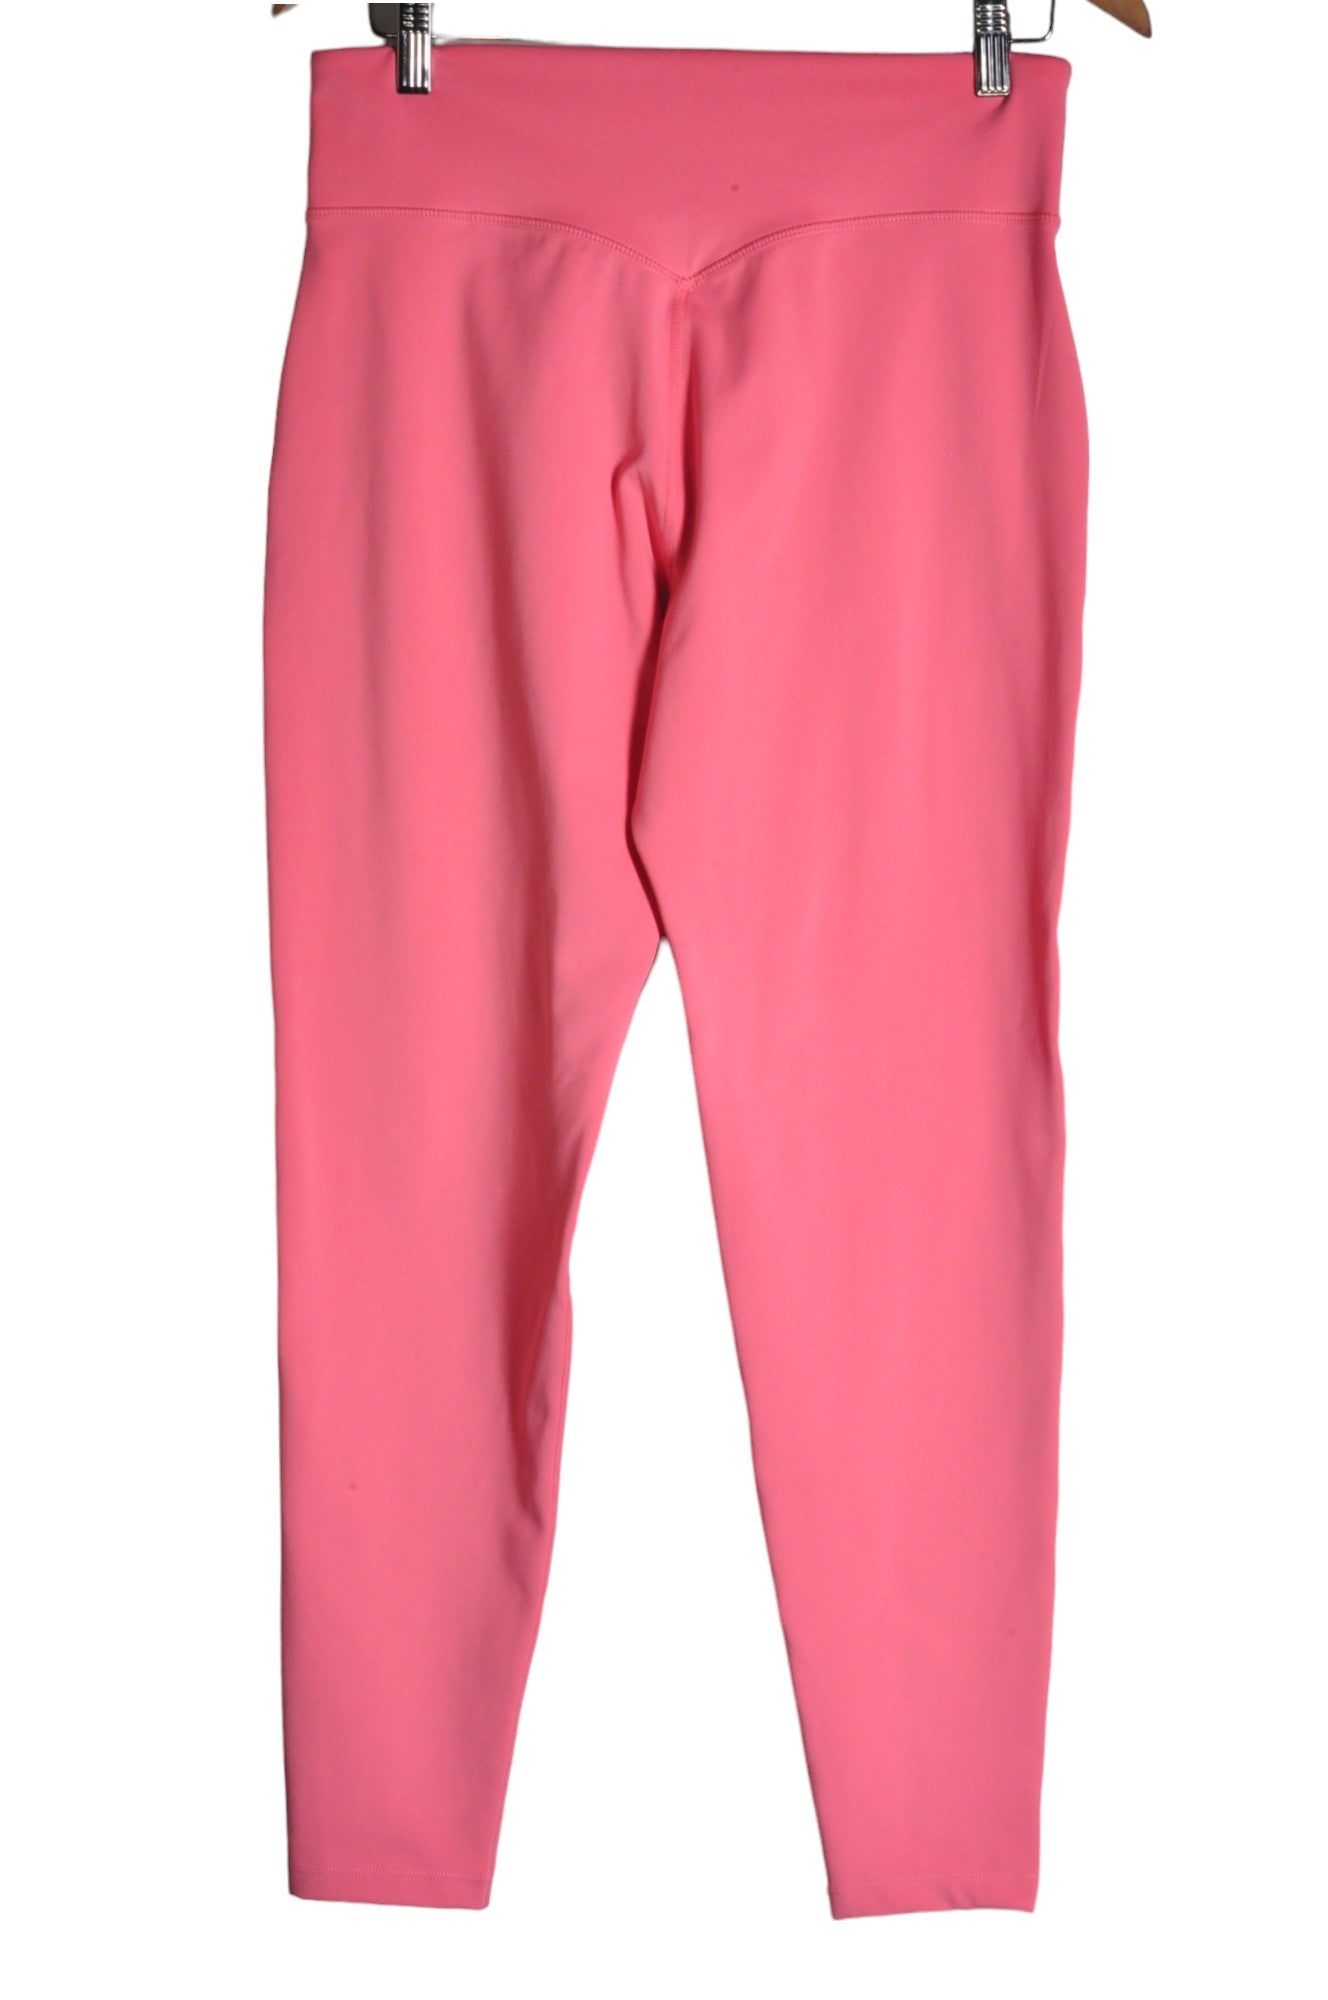 PINK SODA SPORT Women Activewear Leggings Regular fit in Pink - Size L | 10 $ KOOP